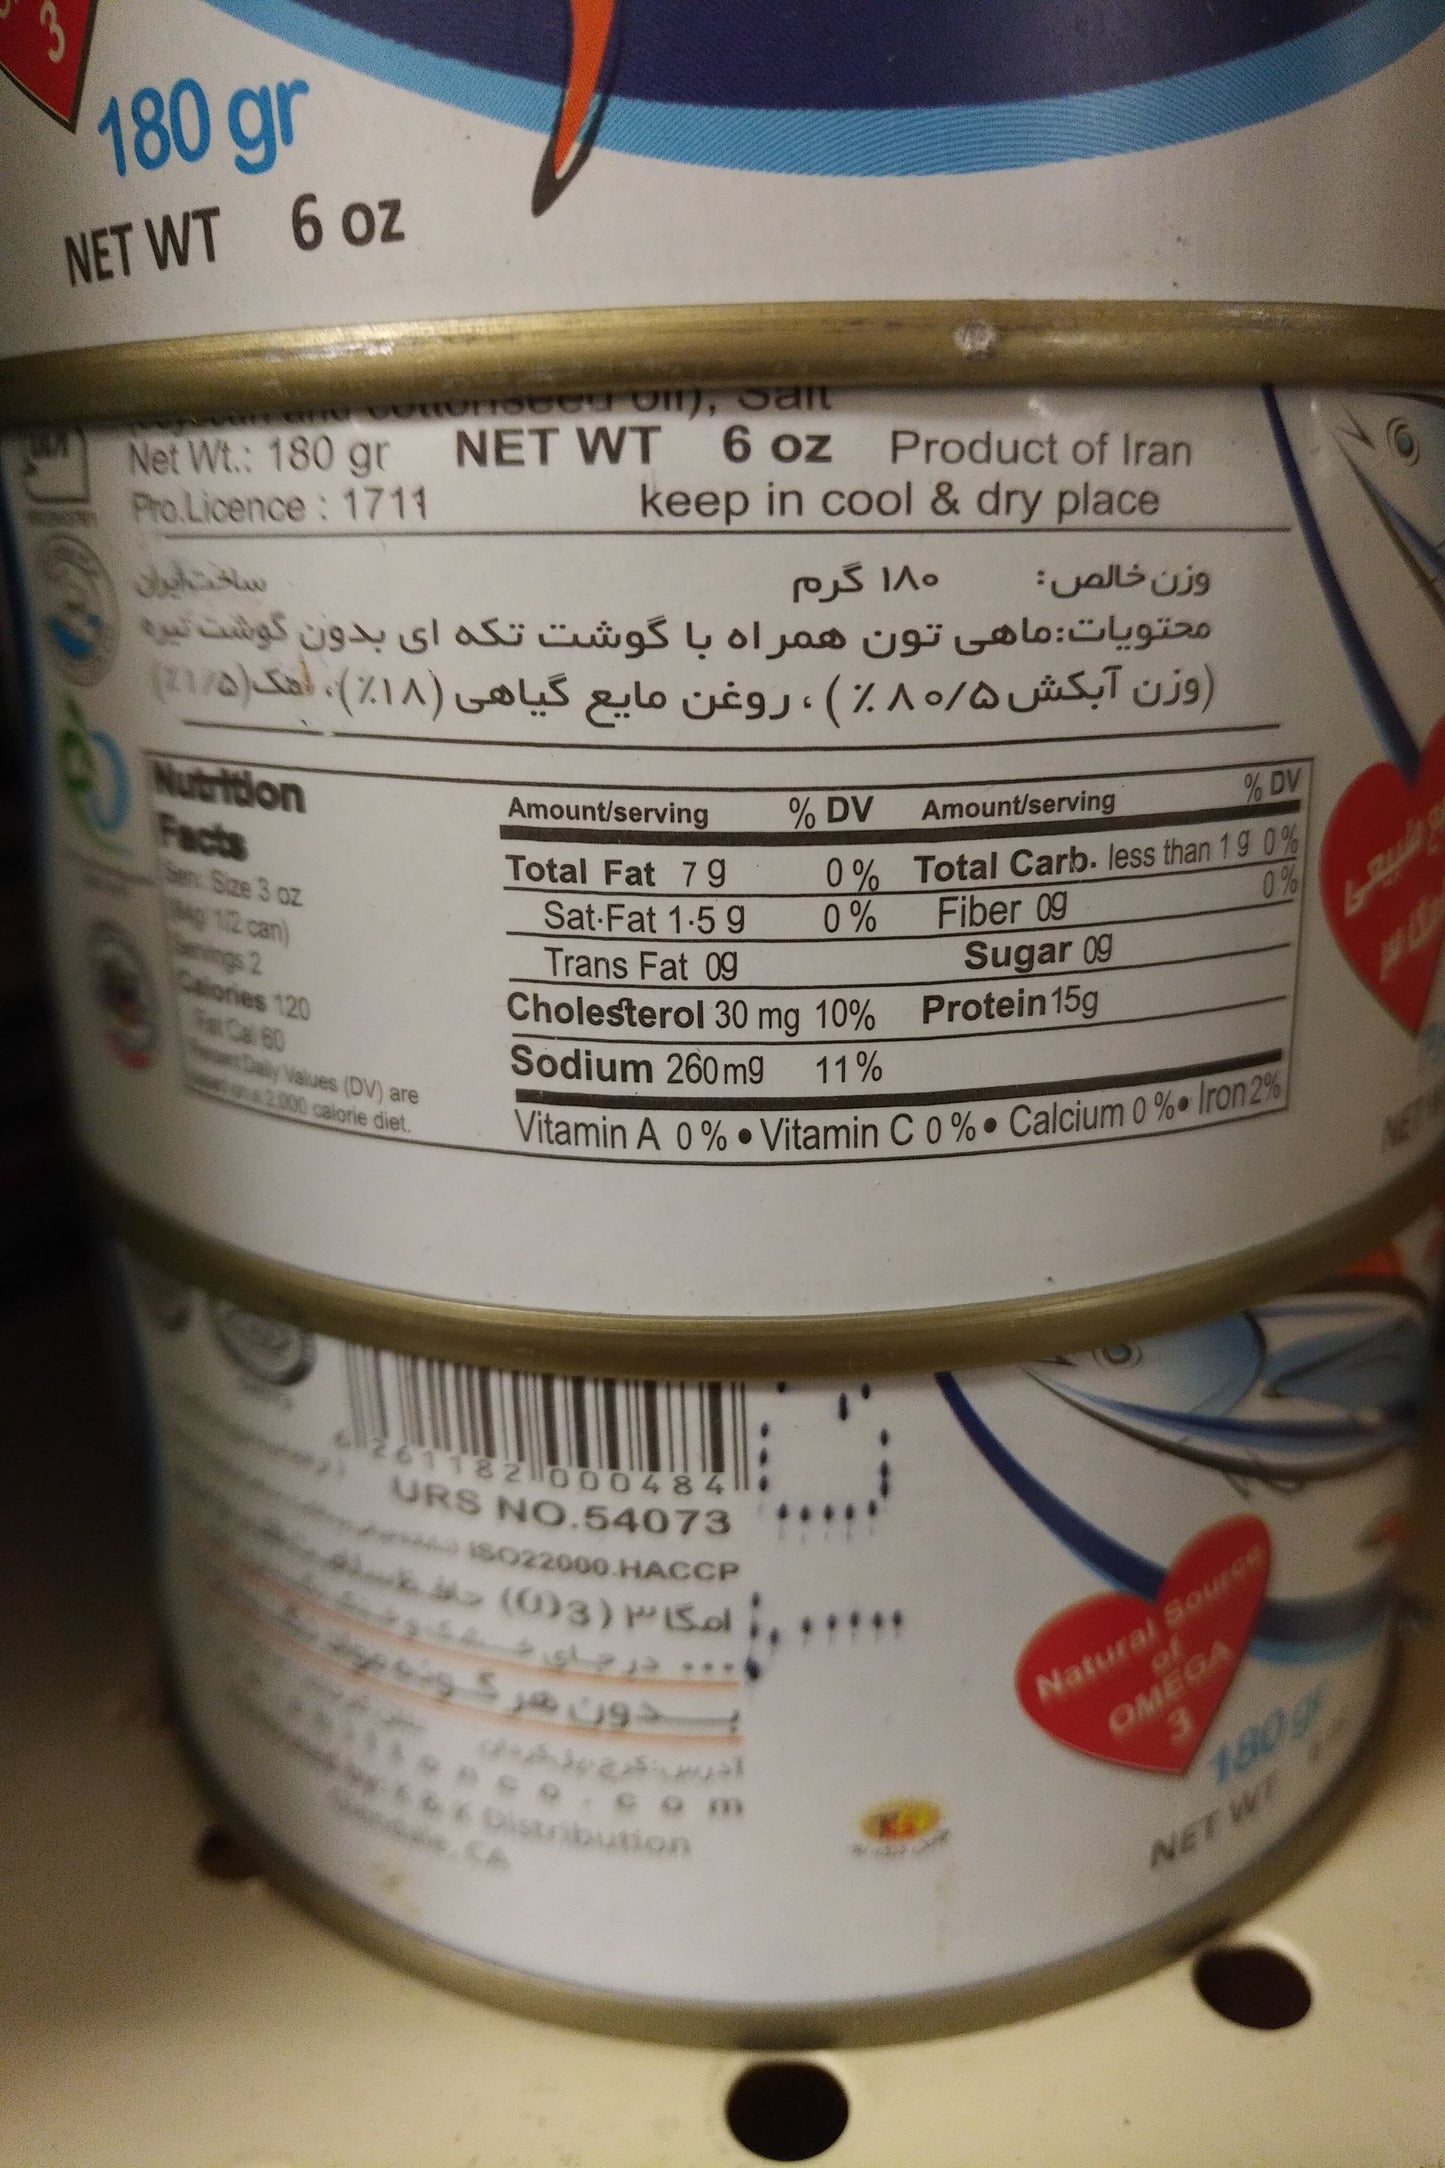 Shilton Chunk Light Tuna in Oil 6oz